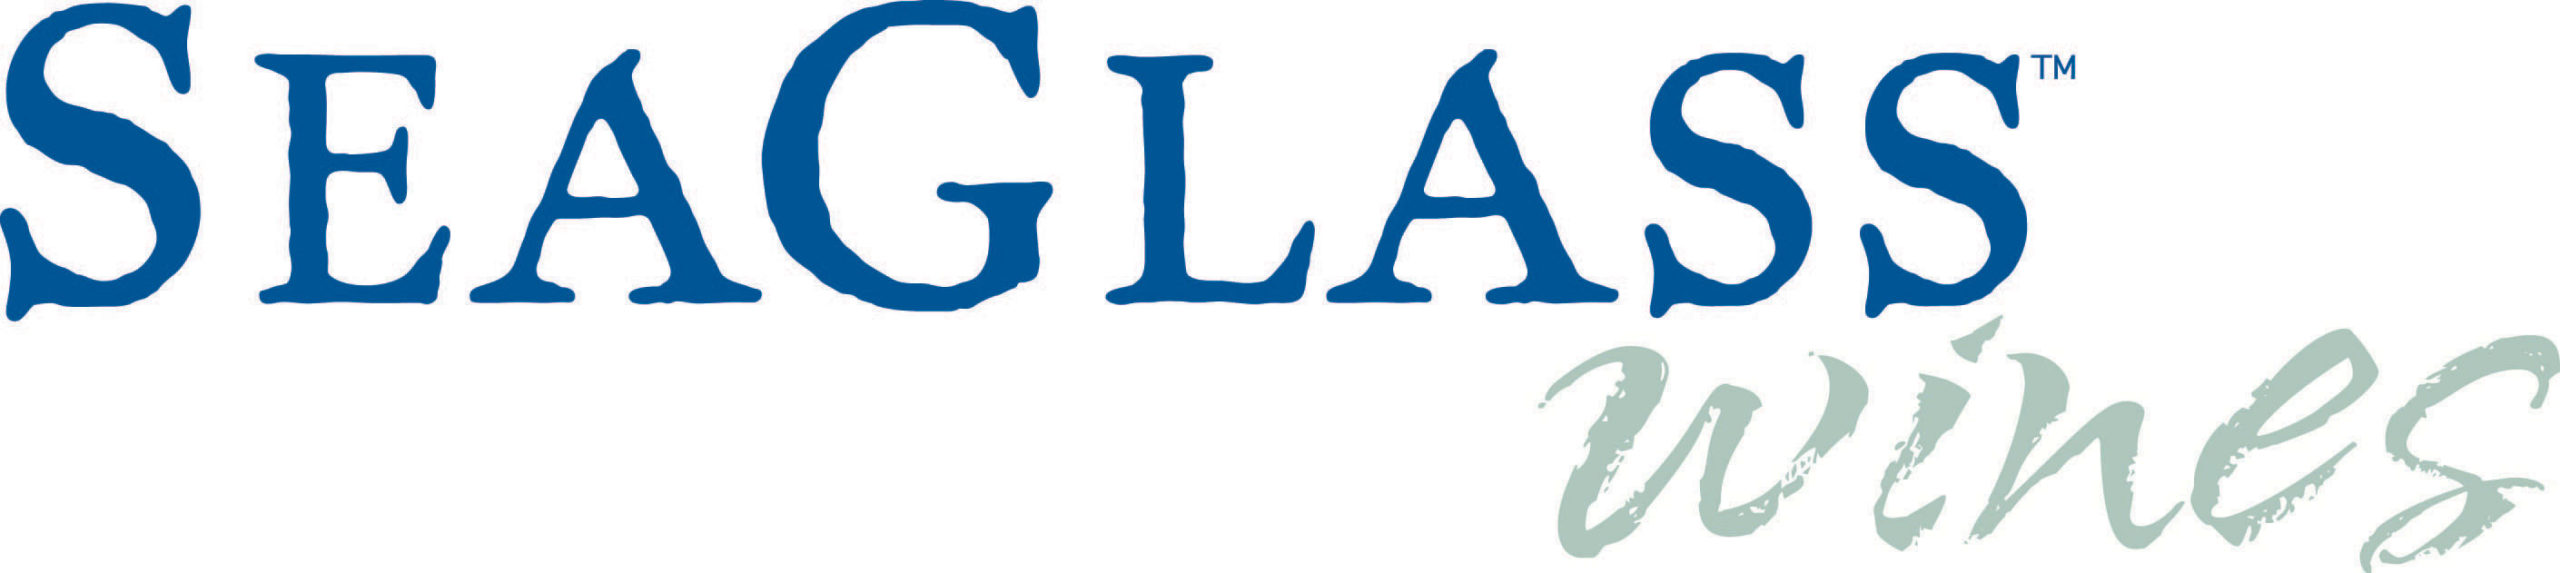 SeaGlass-Wine-Hi-Res-Logo-web-scaled